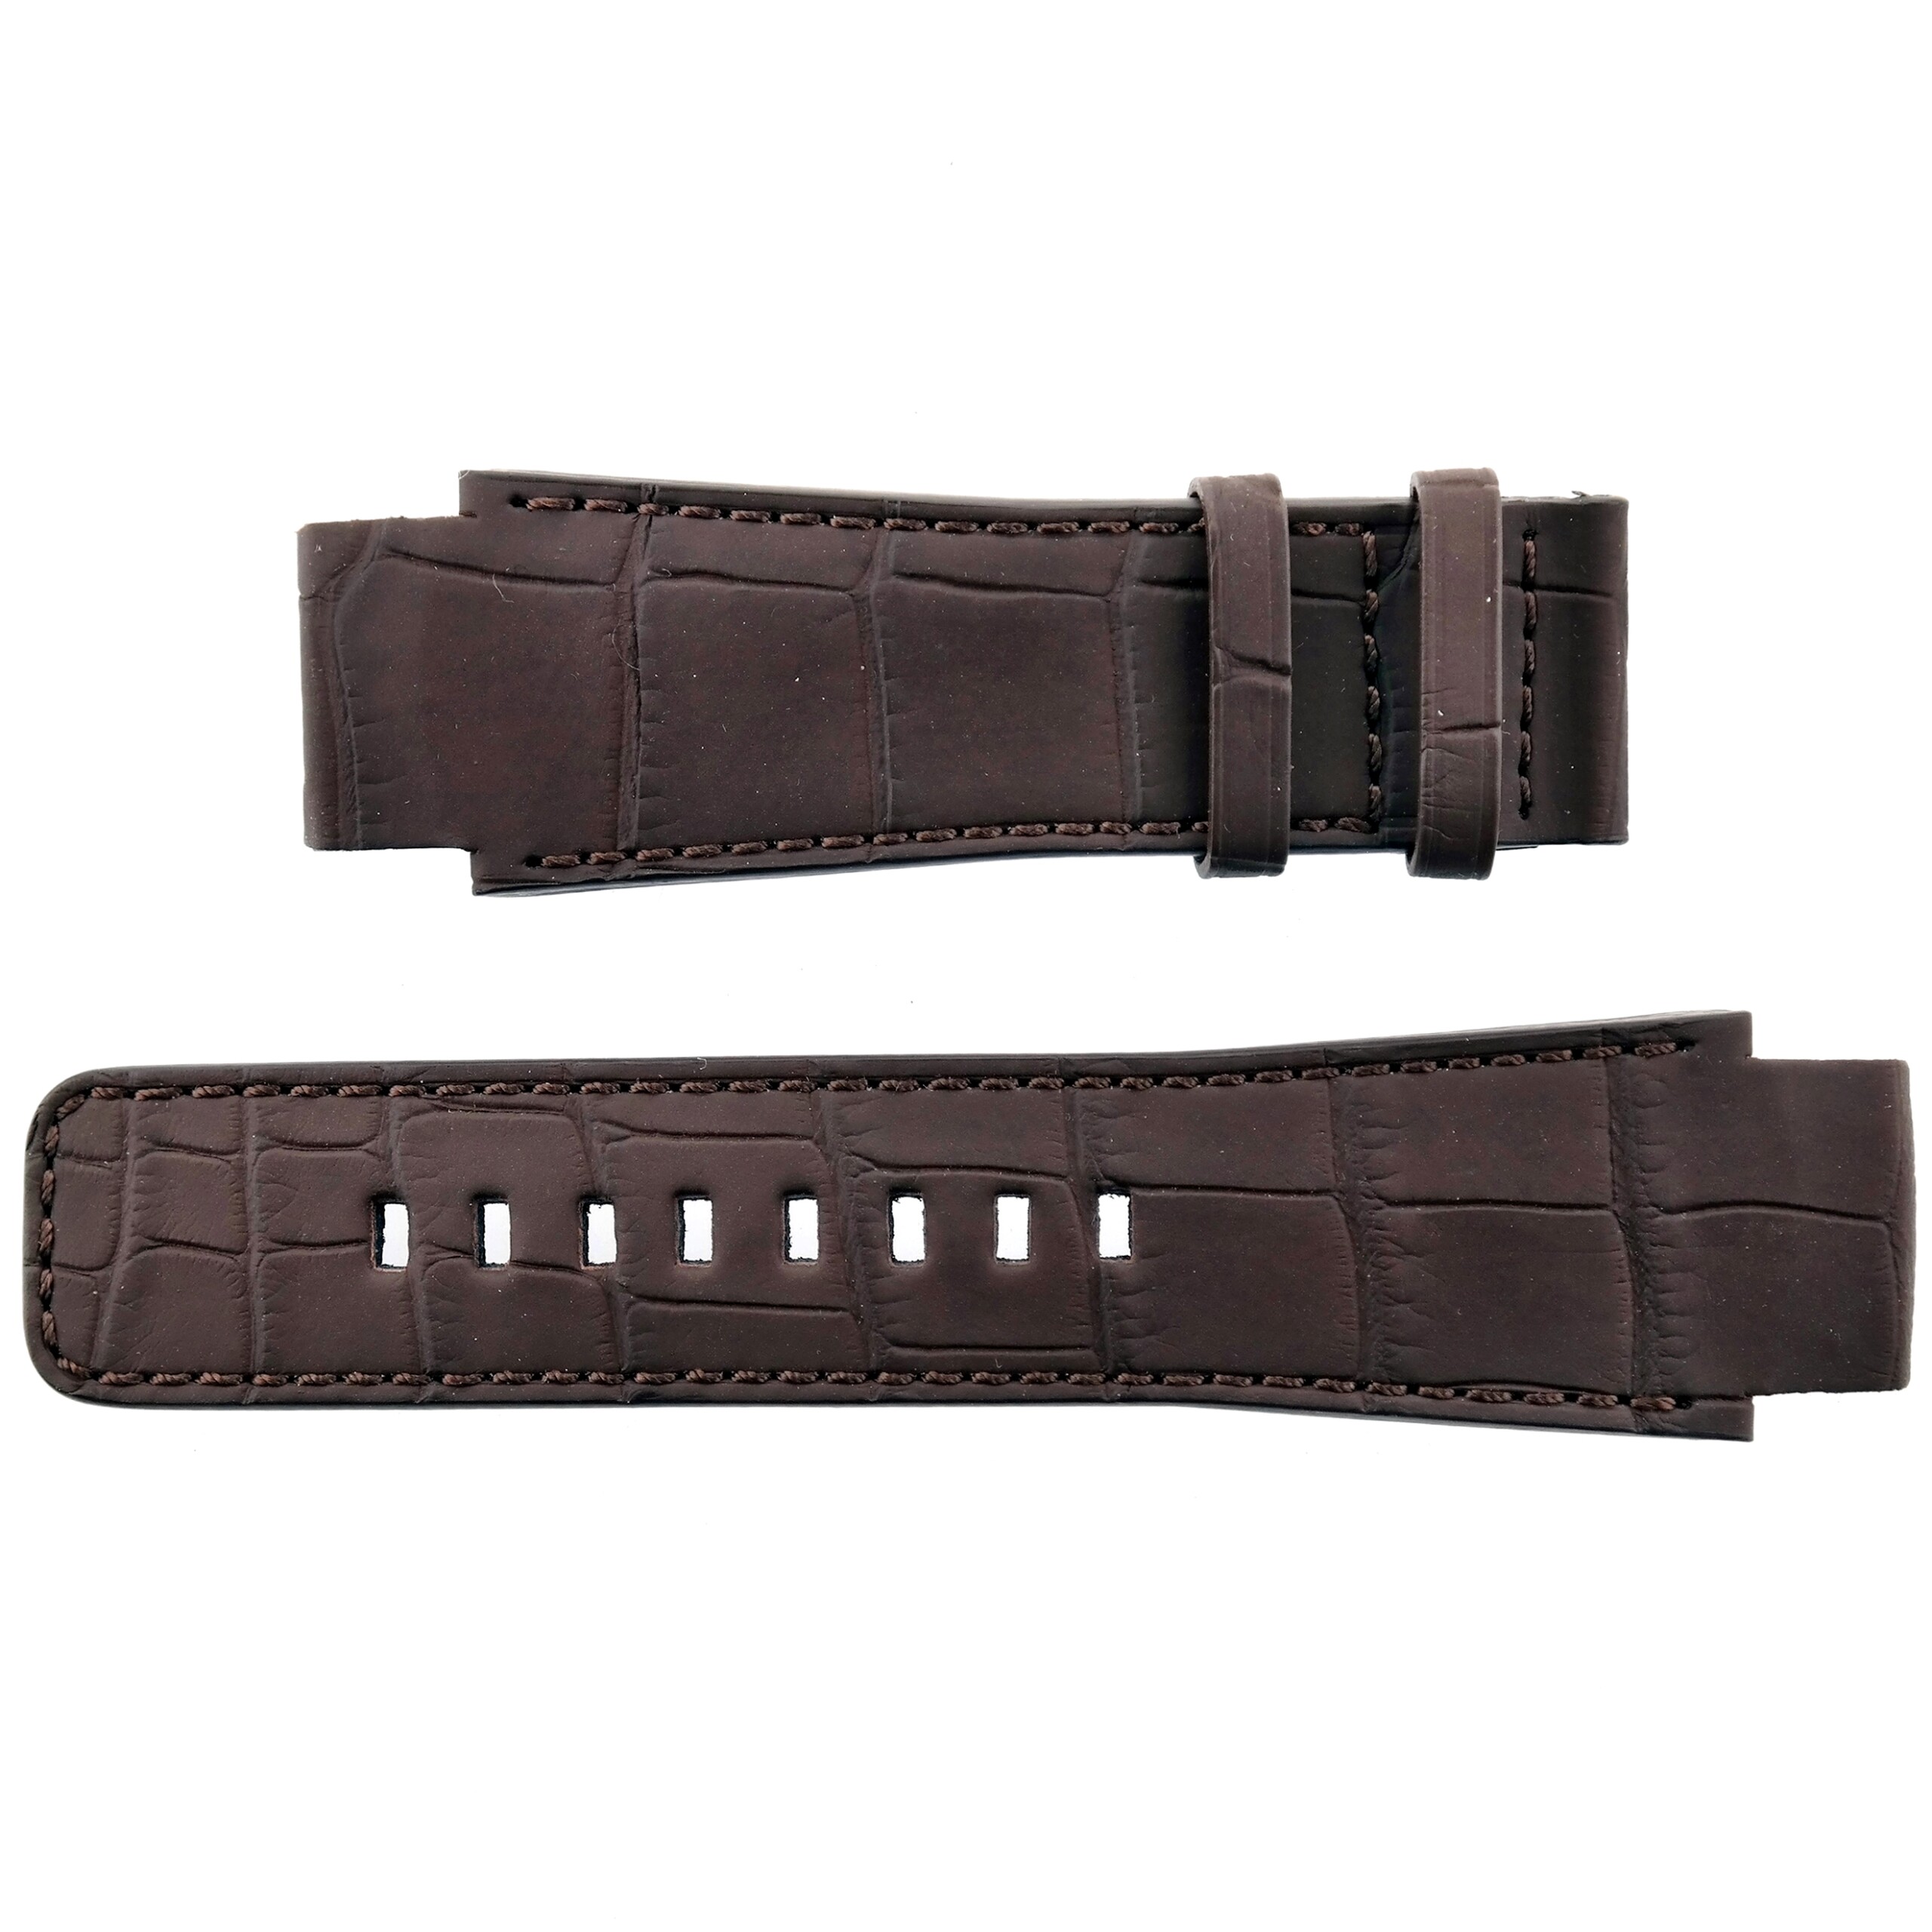 CLERC Geneve - Hydroscaph - Leather Watch Strap - Brown - Genuine Gator